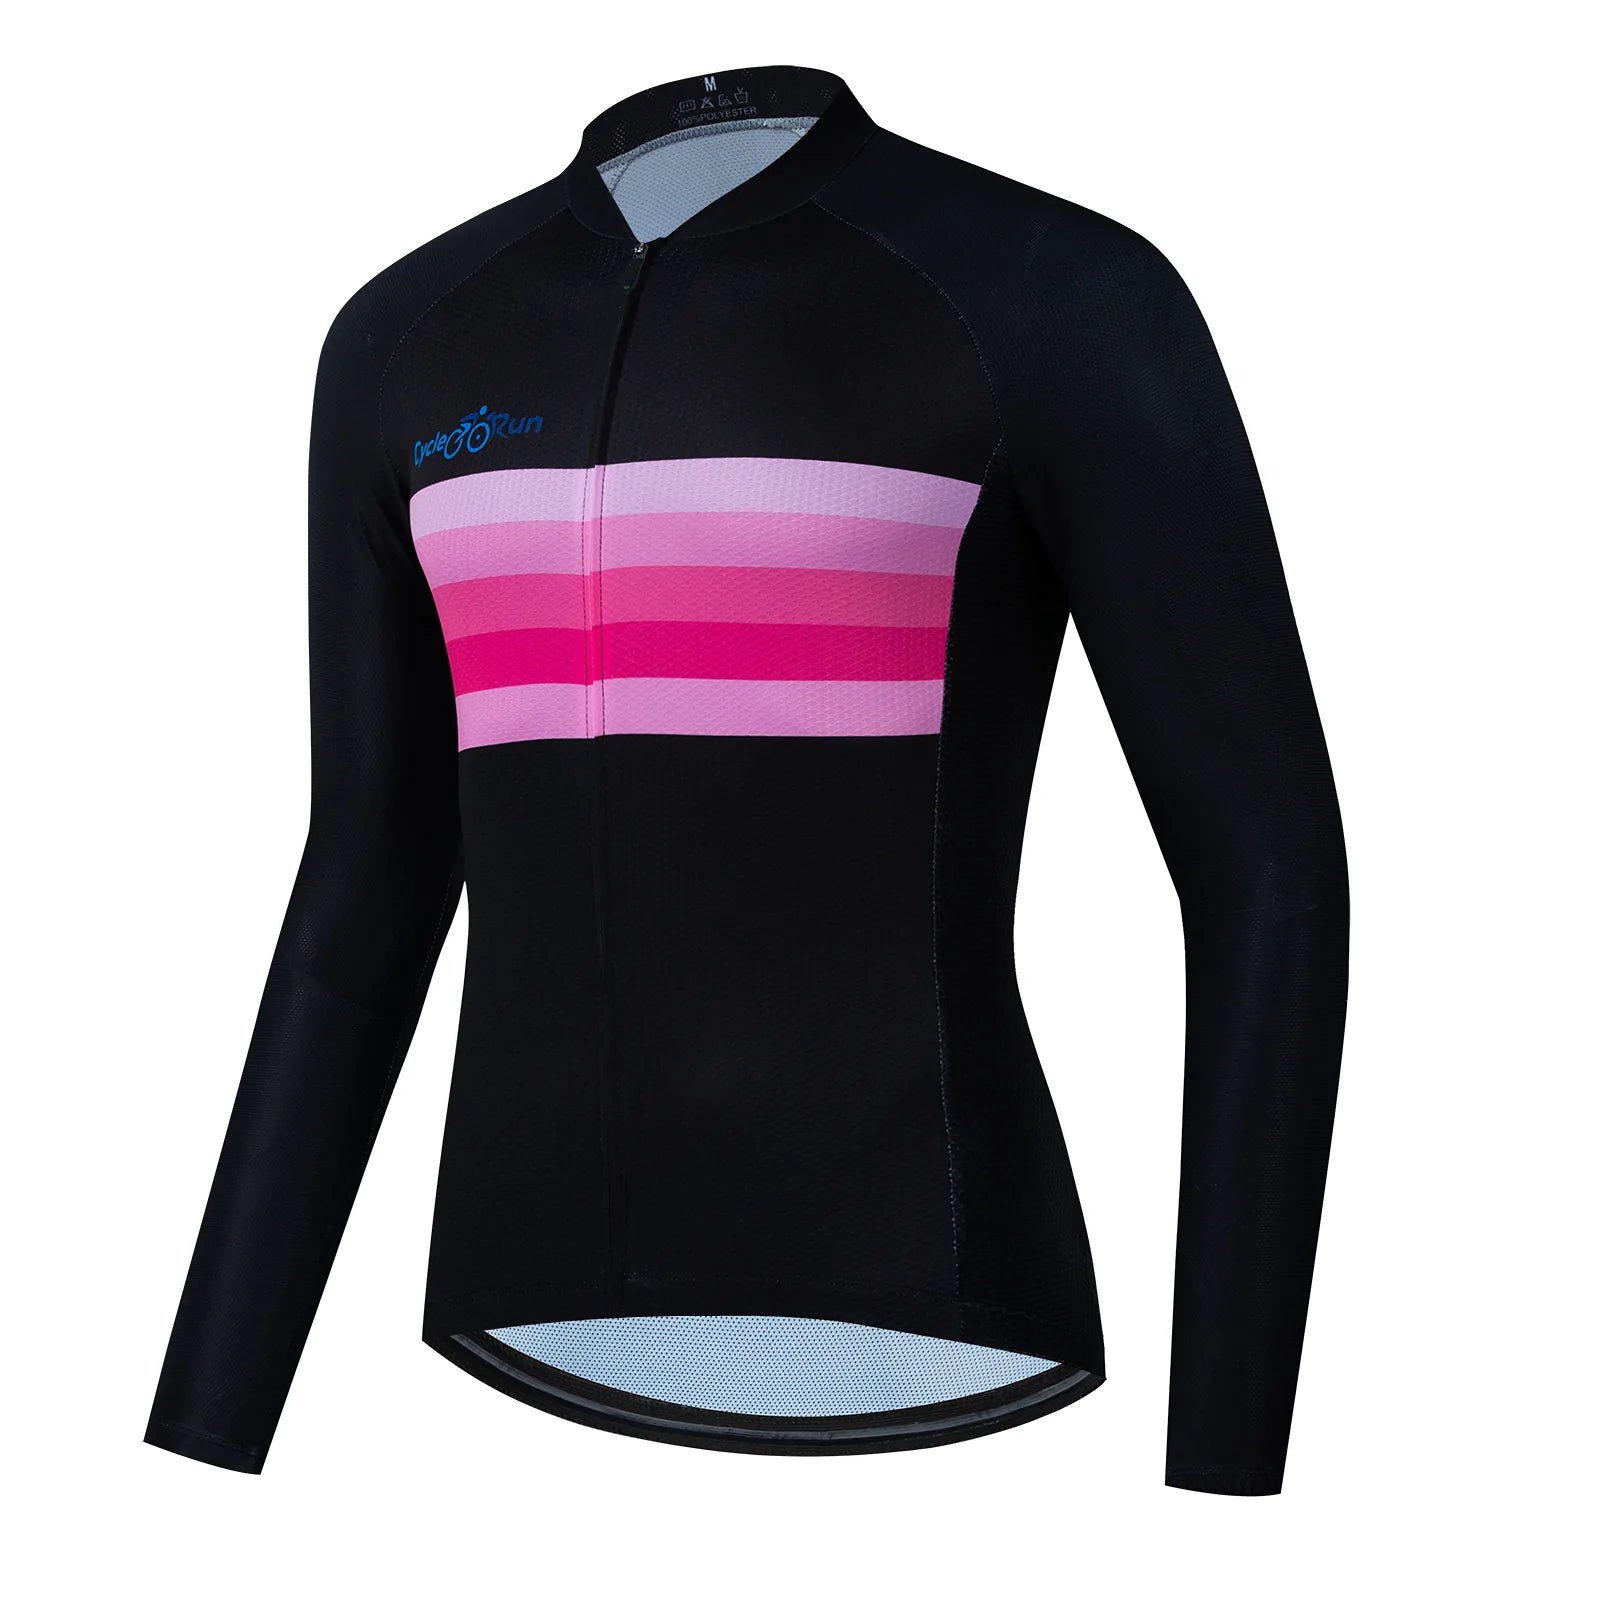 Carir Long Sleeve Cycling jersey for women